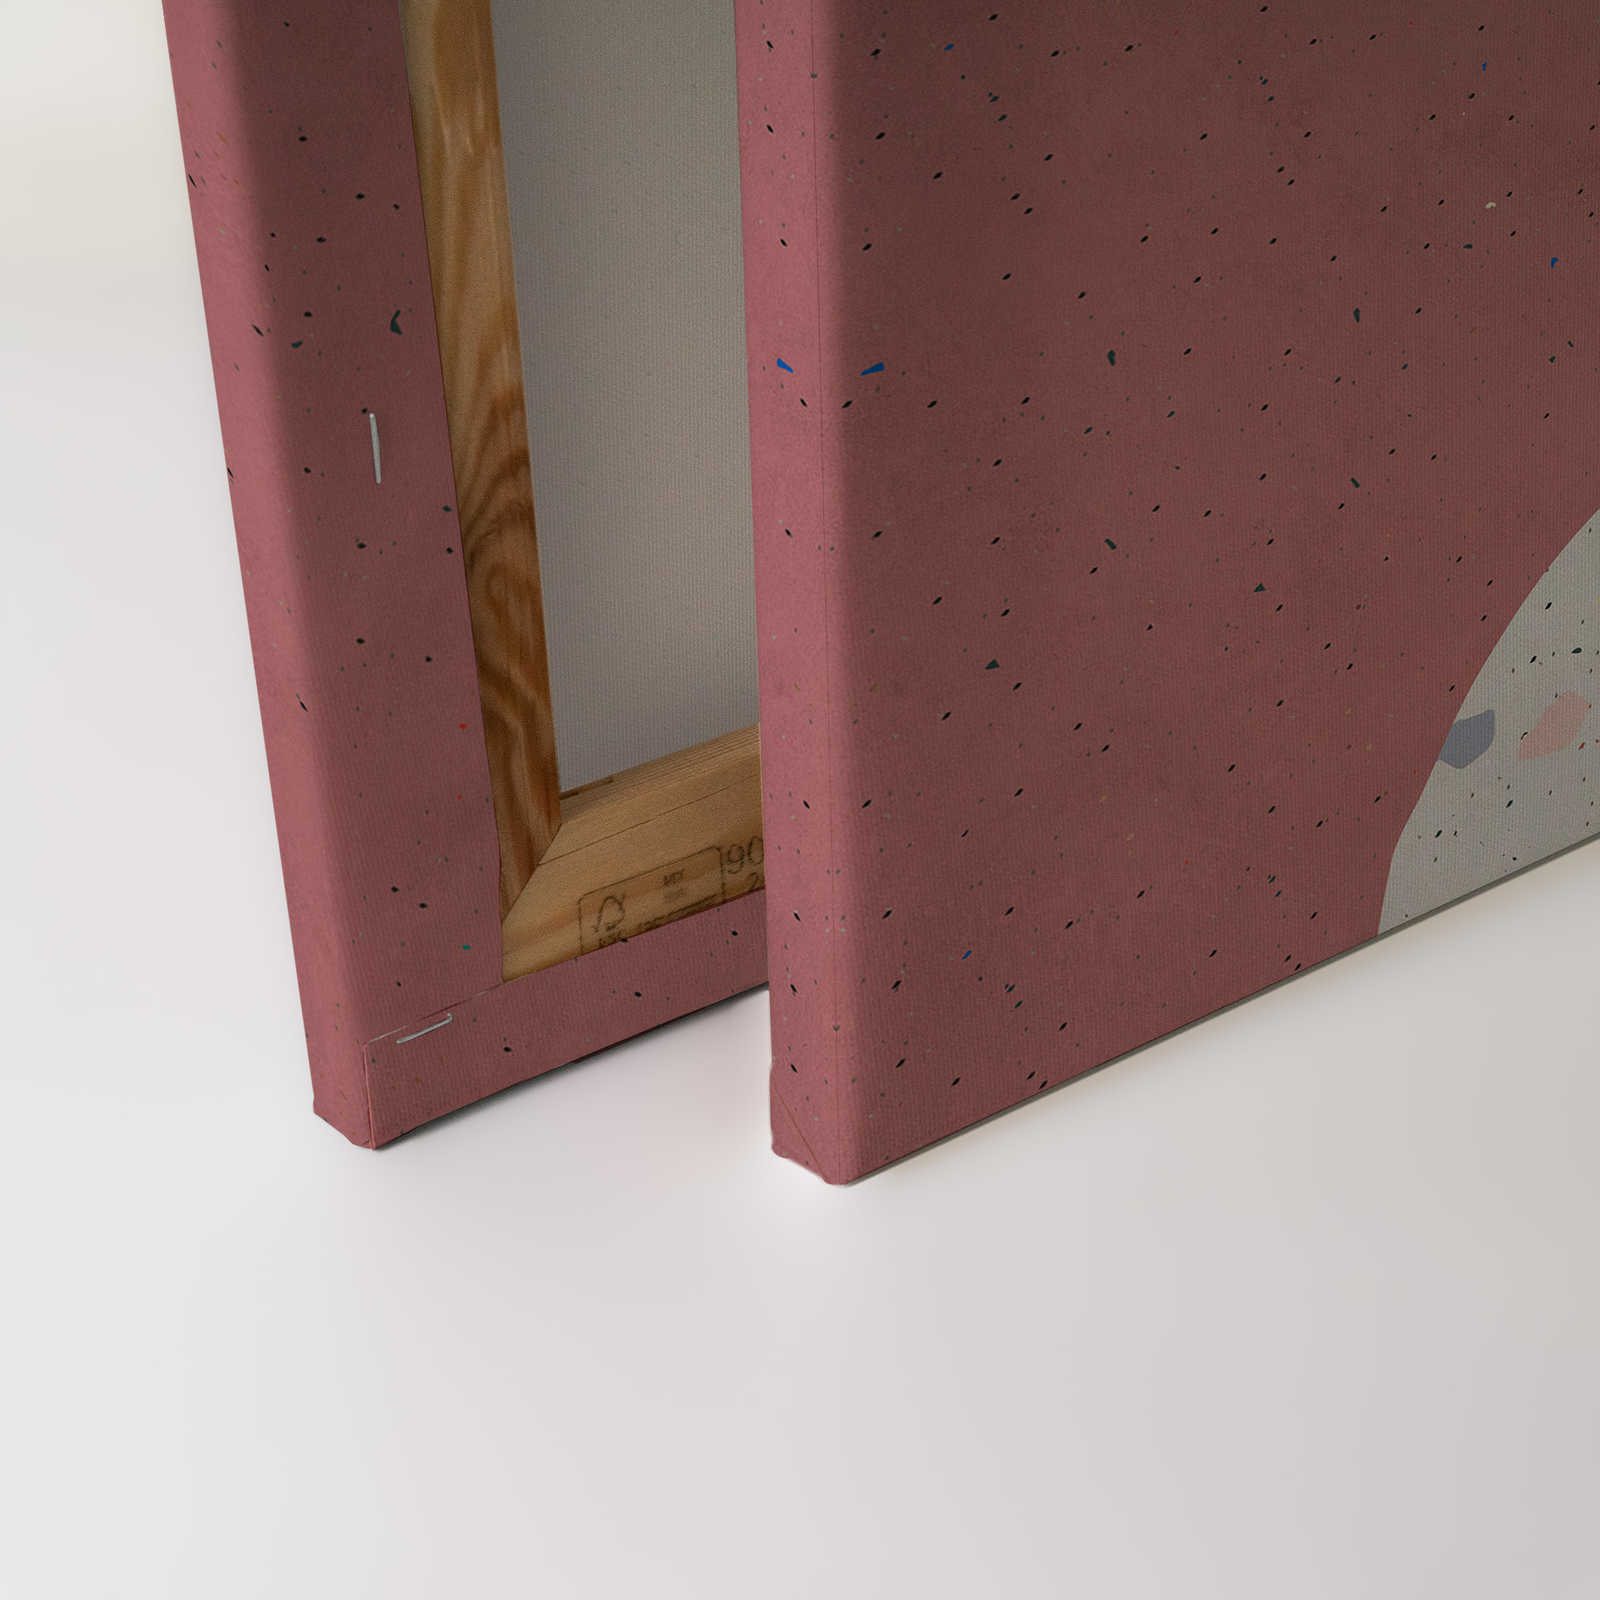             Terrazo 5 - Pintura sobre lienzo en estructura de papel secante, collage terrazo - 0,90 m x 0,60 m
        